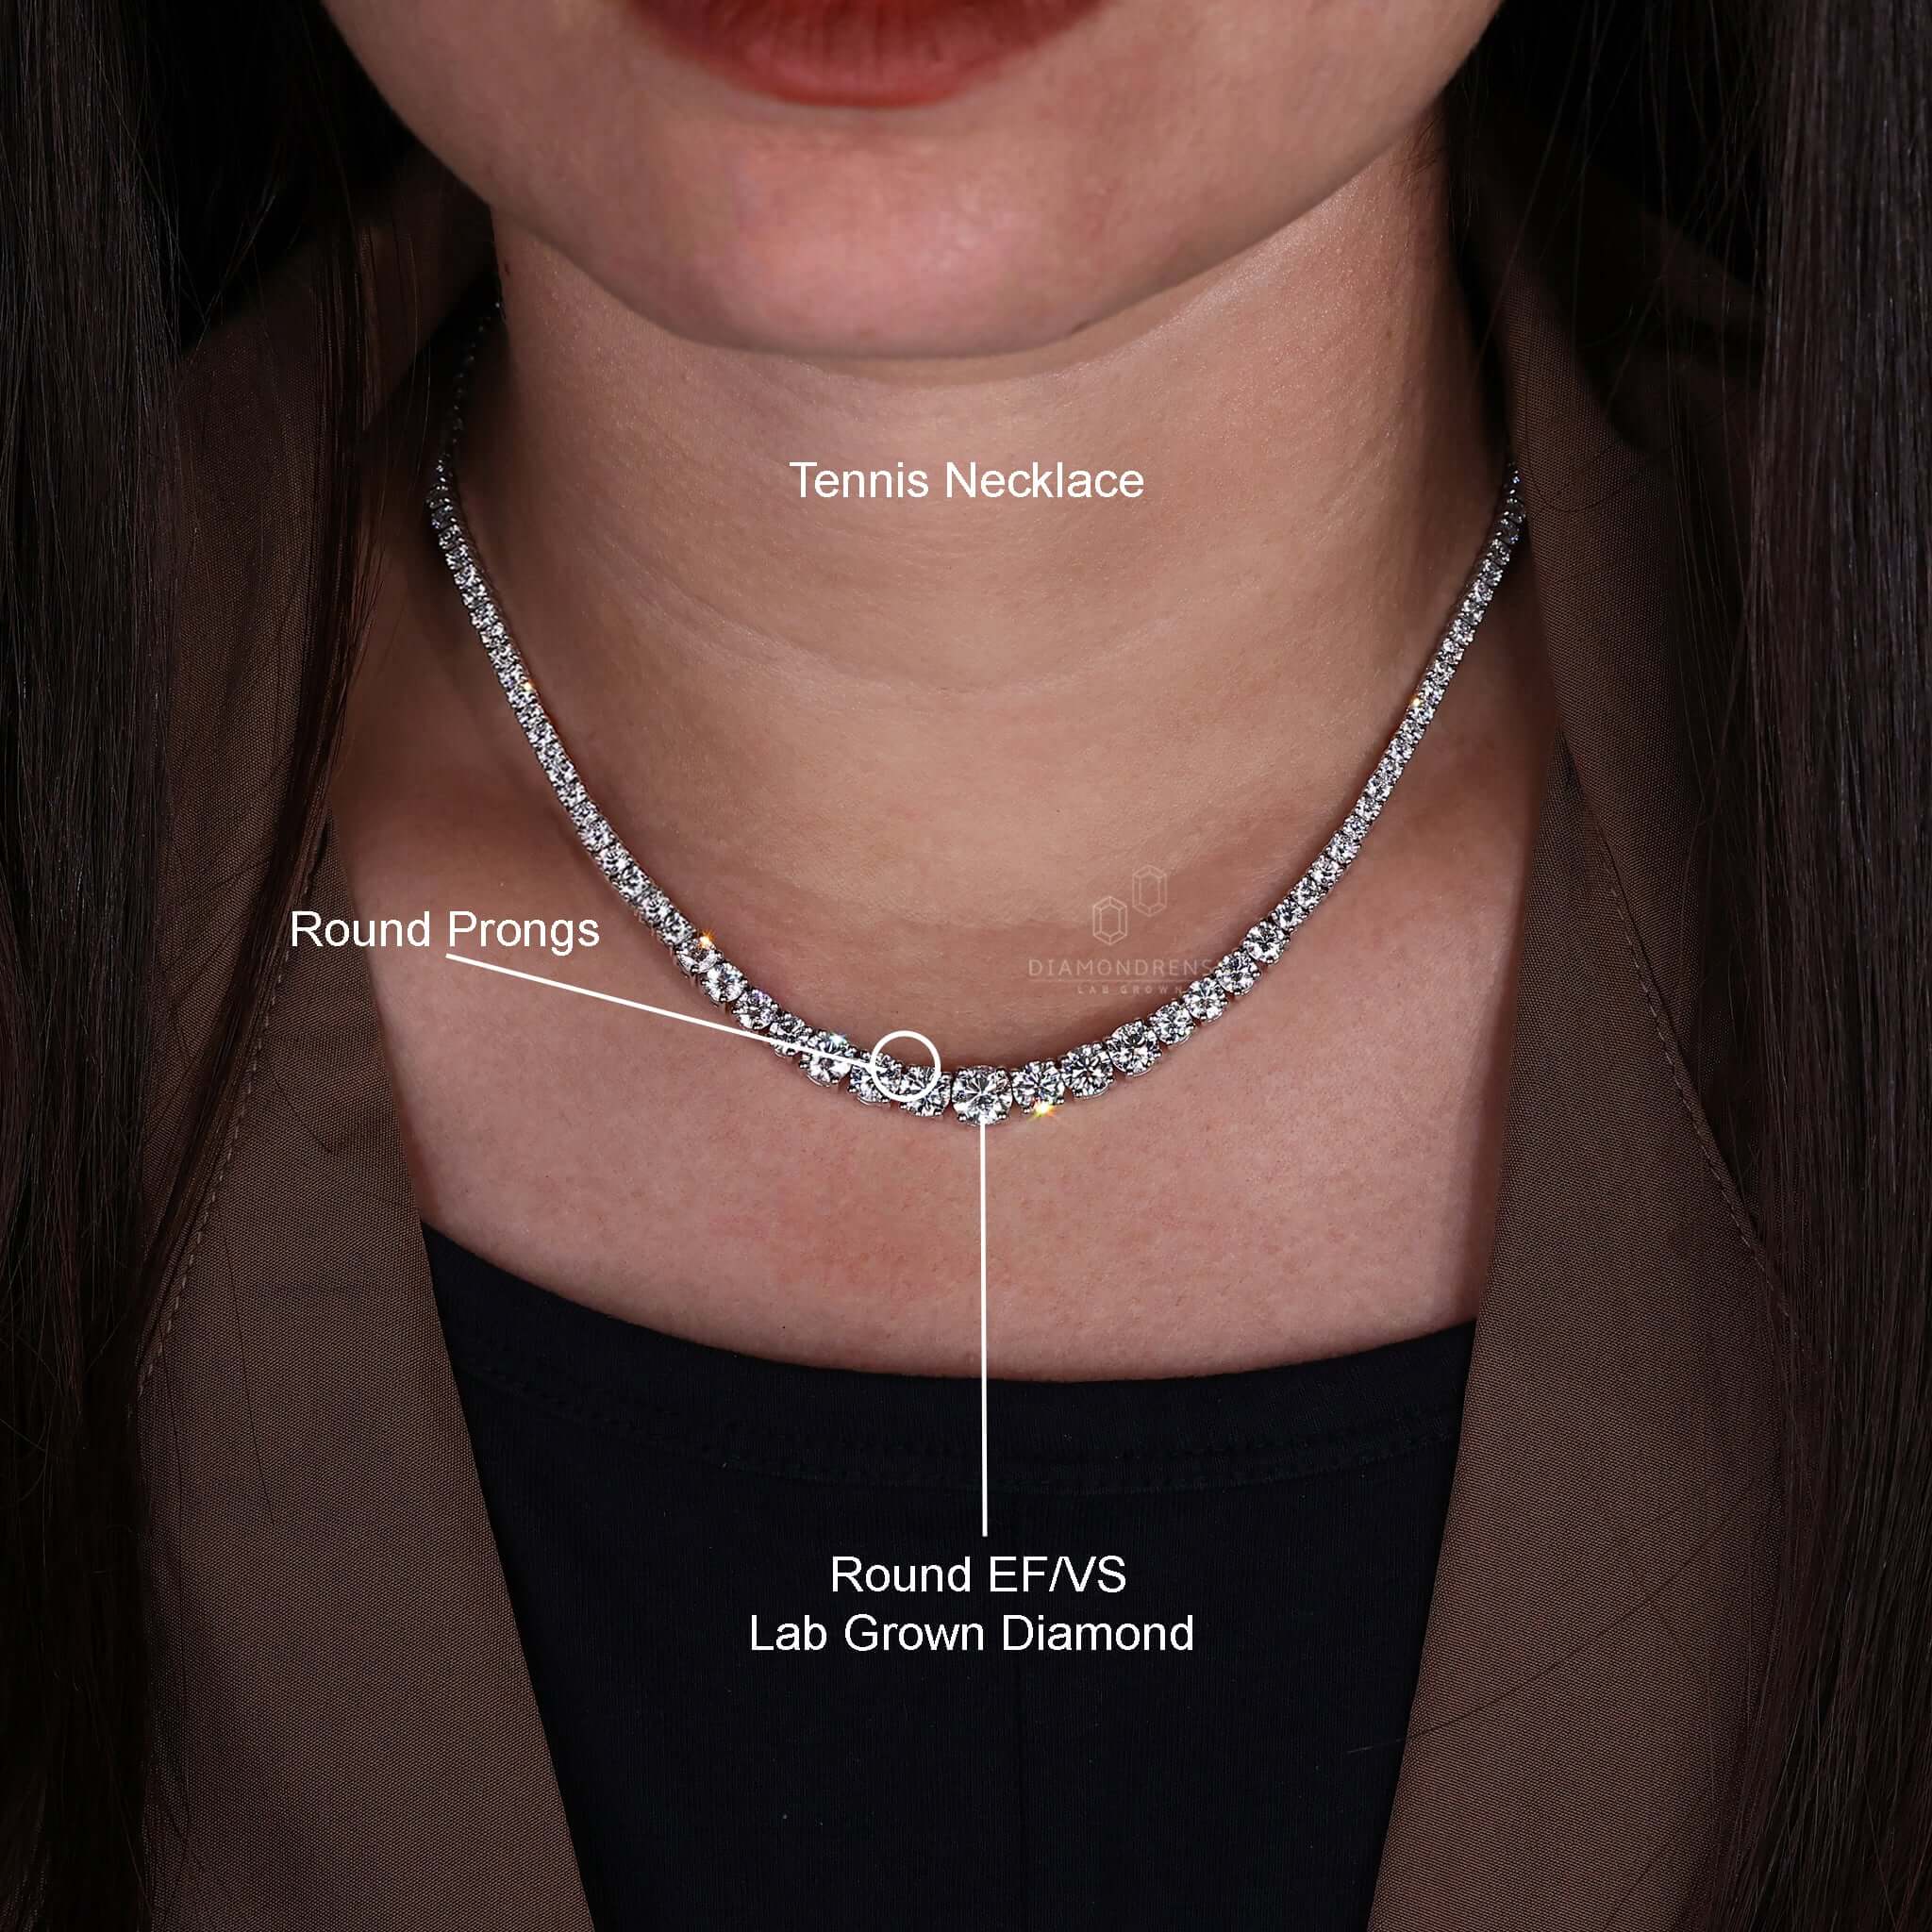 Lab Grown Diamond Necklaces | Neiman Marcus